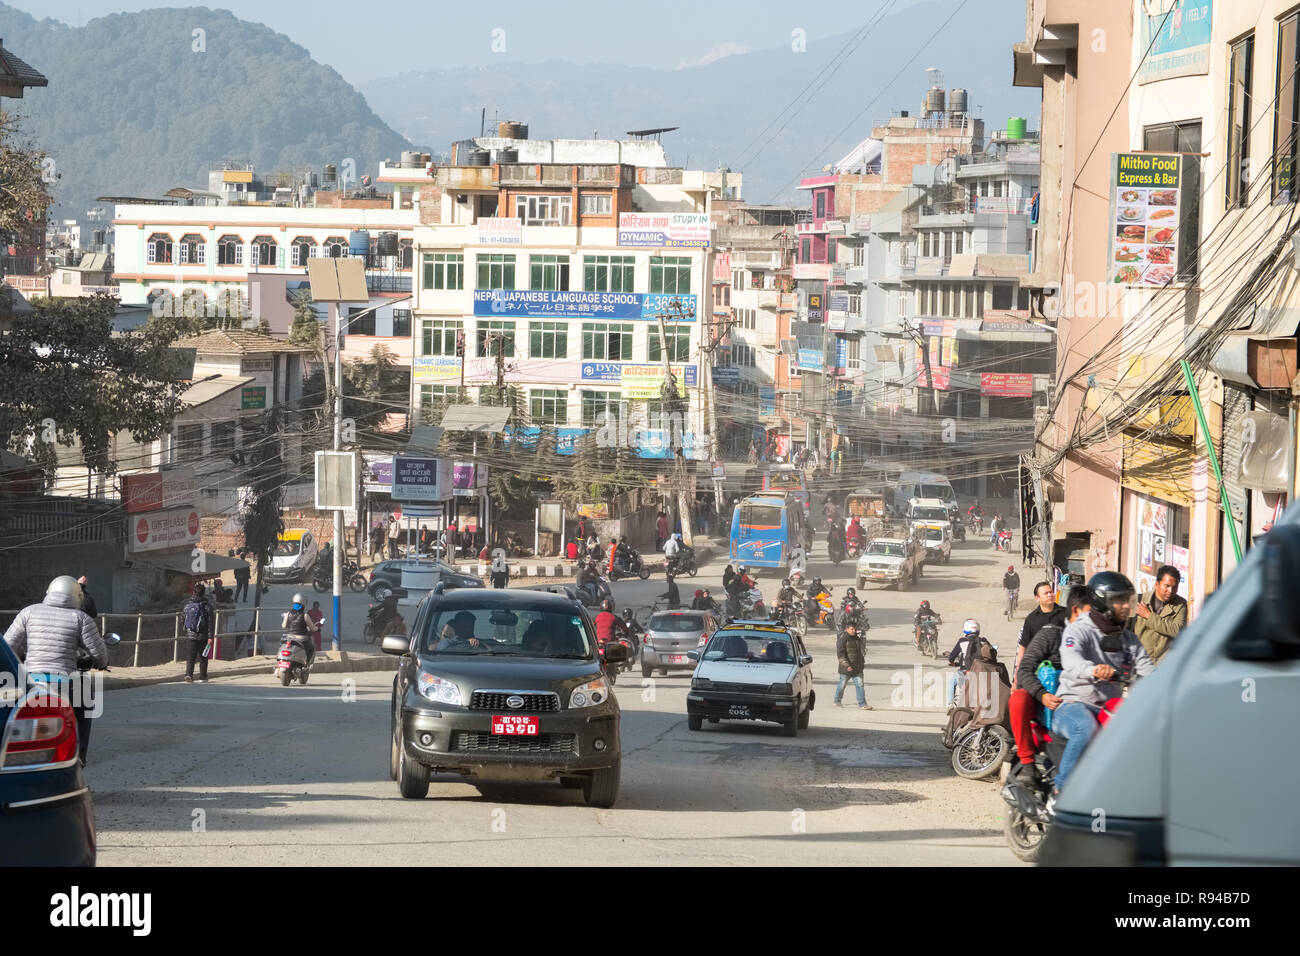 Traffic  on the dusty steets of Kathmandu, Nepal Stock Photo